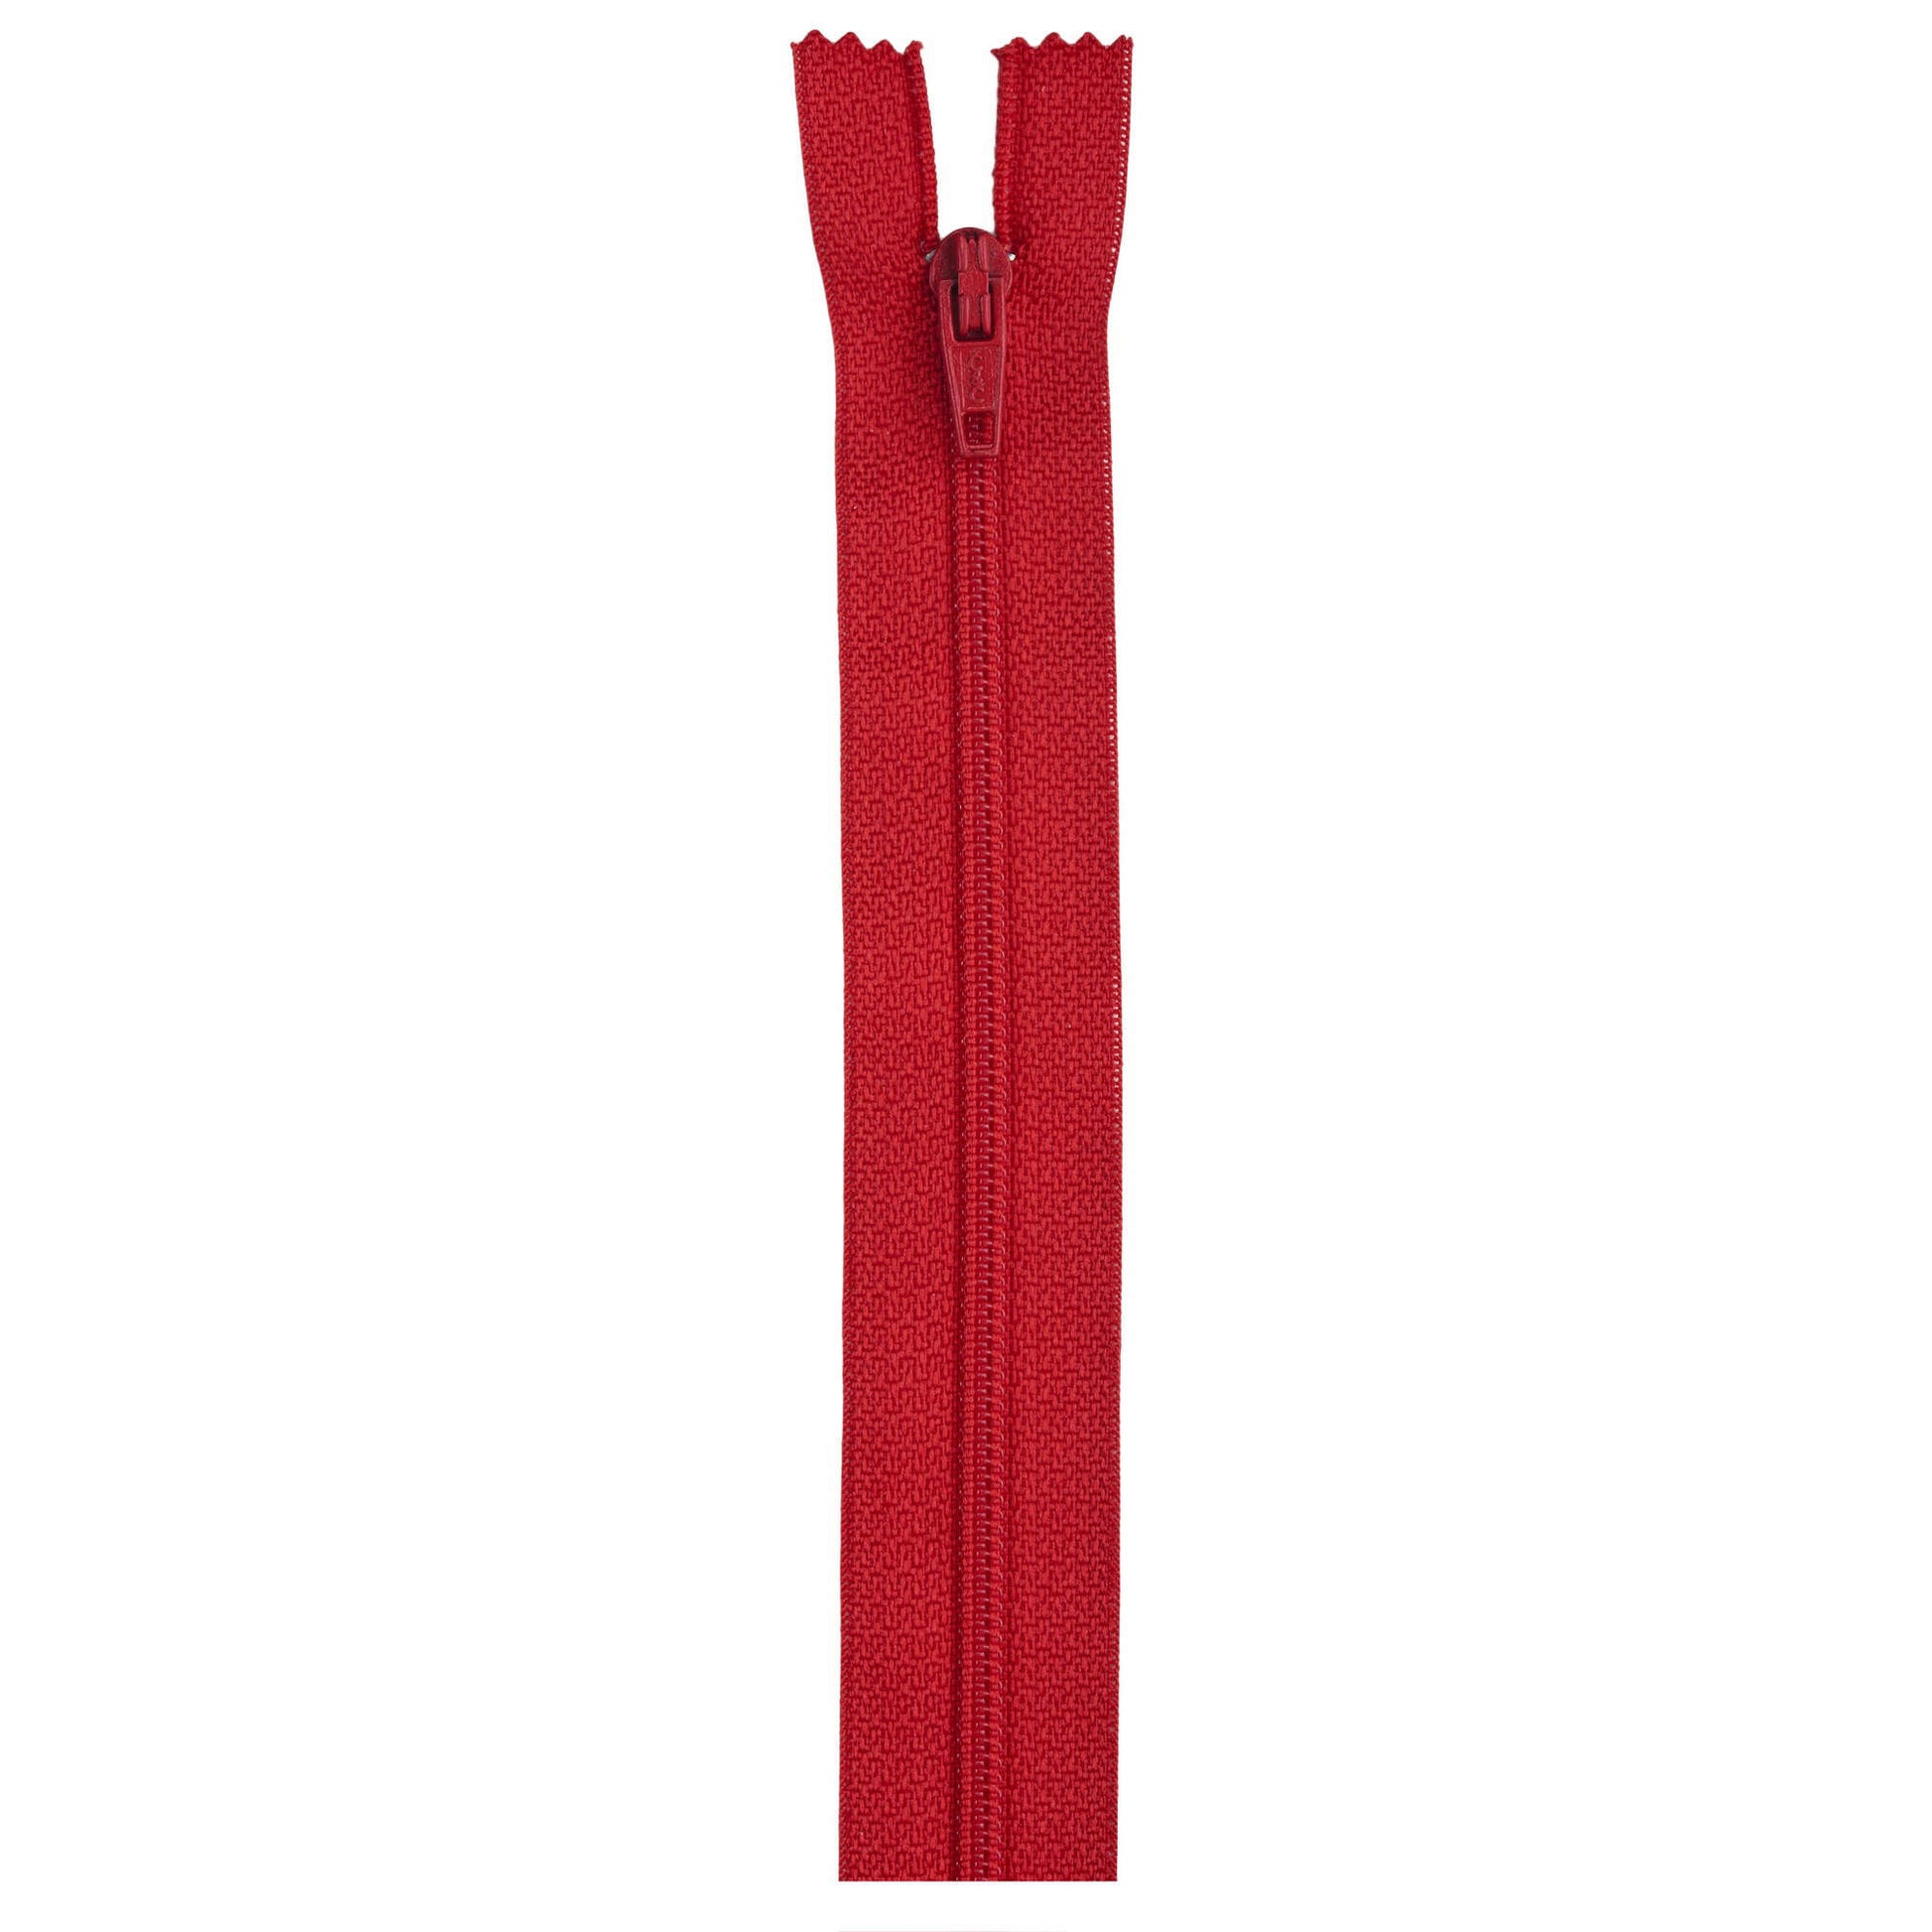 Coats & Clark C&C Lghtwght Coil Separating Zipper 10 Red